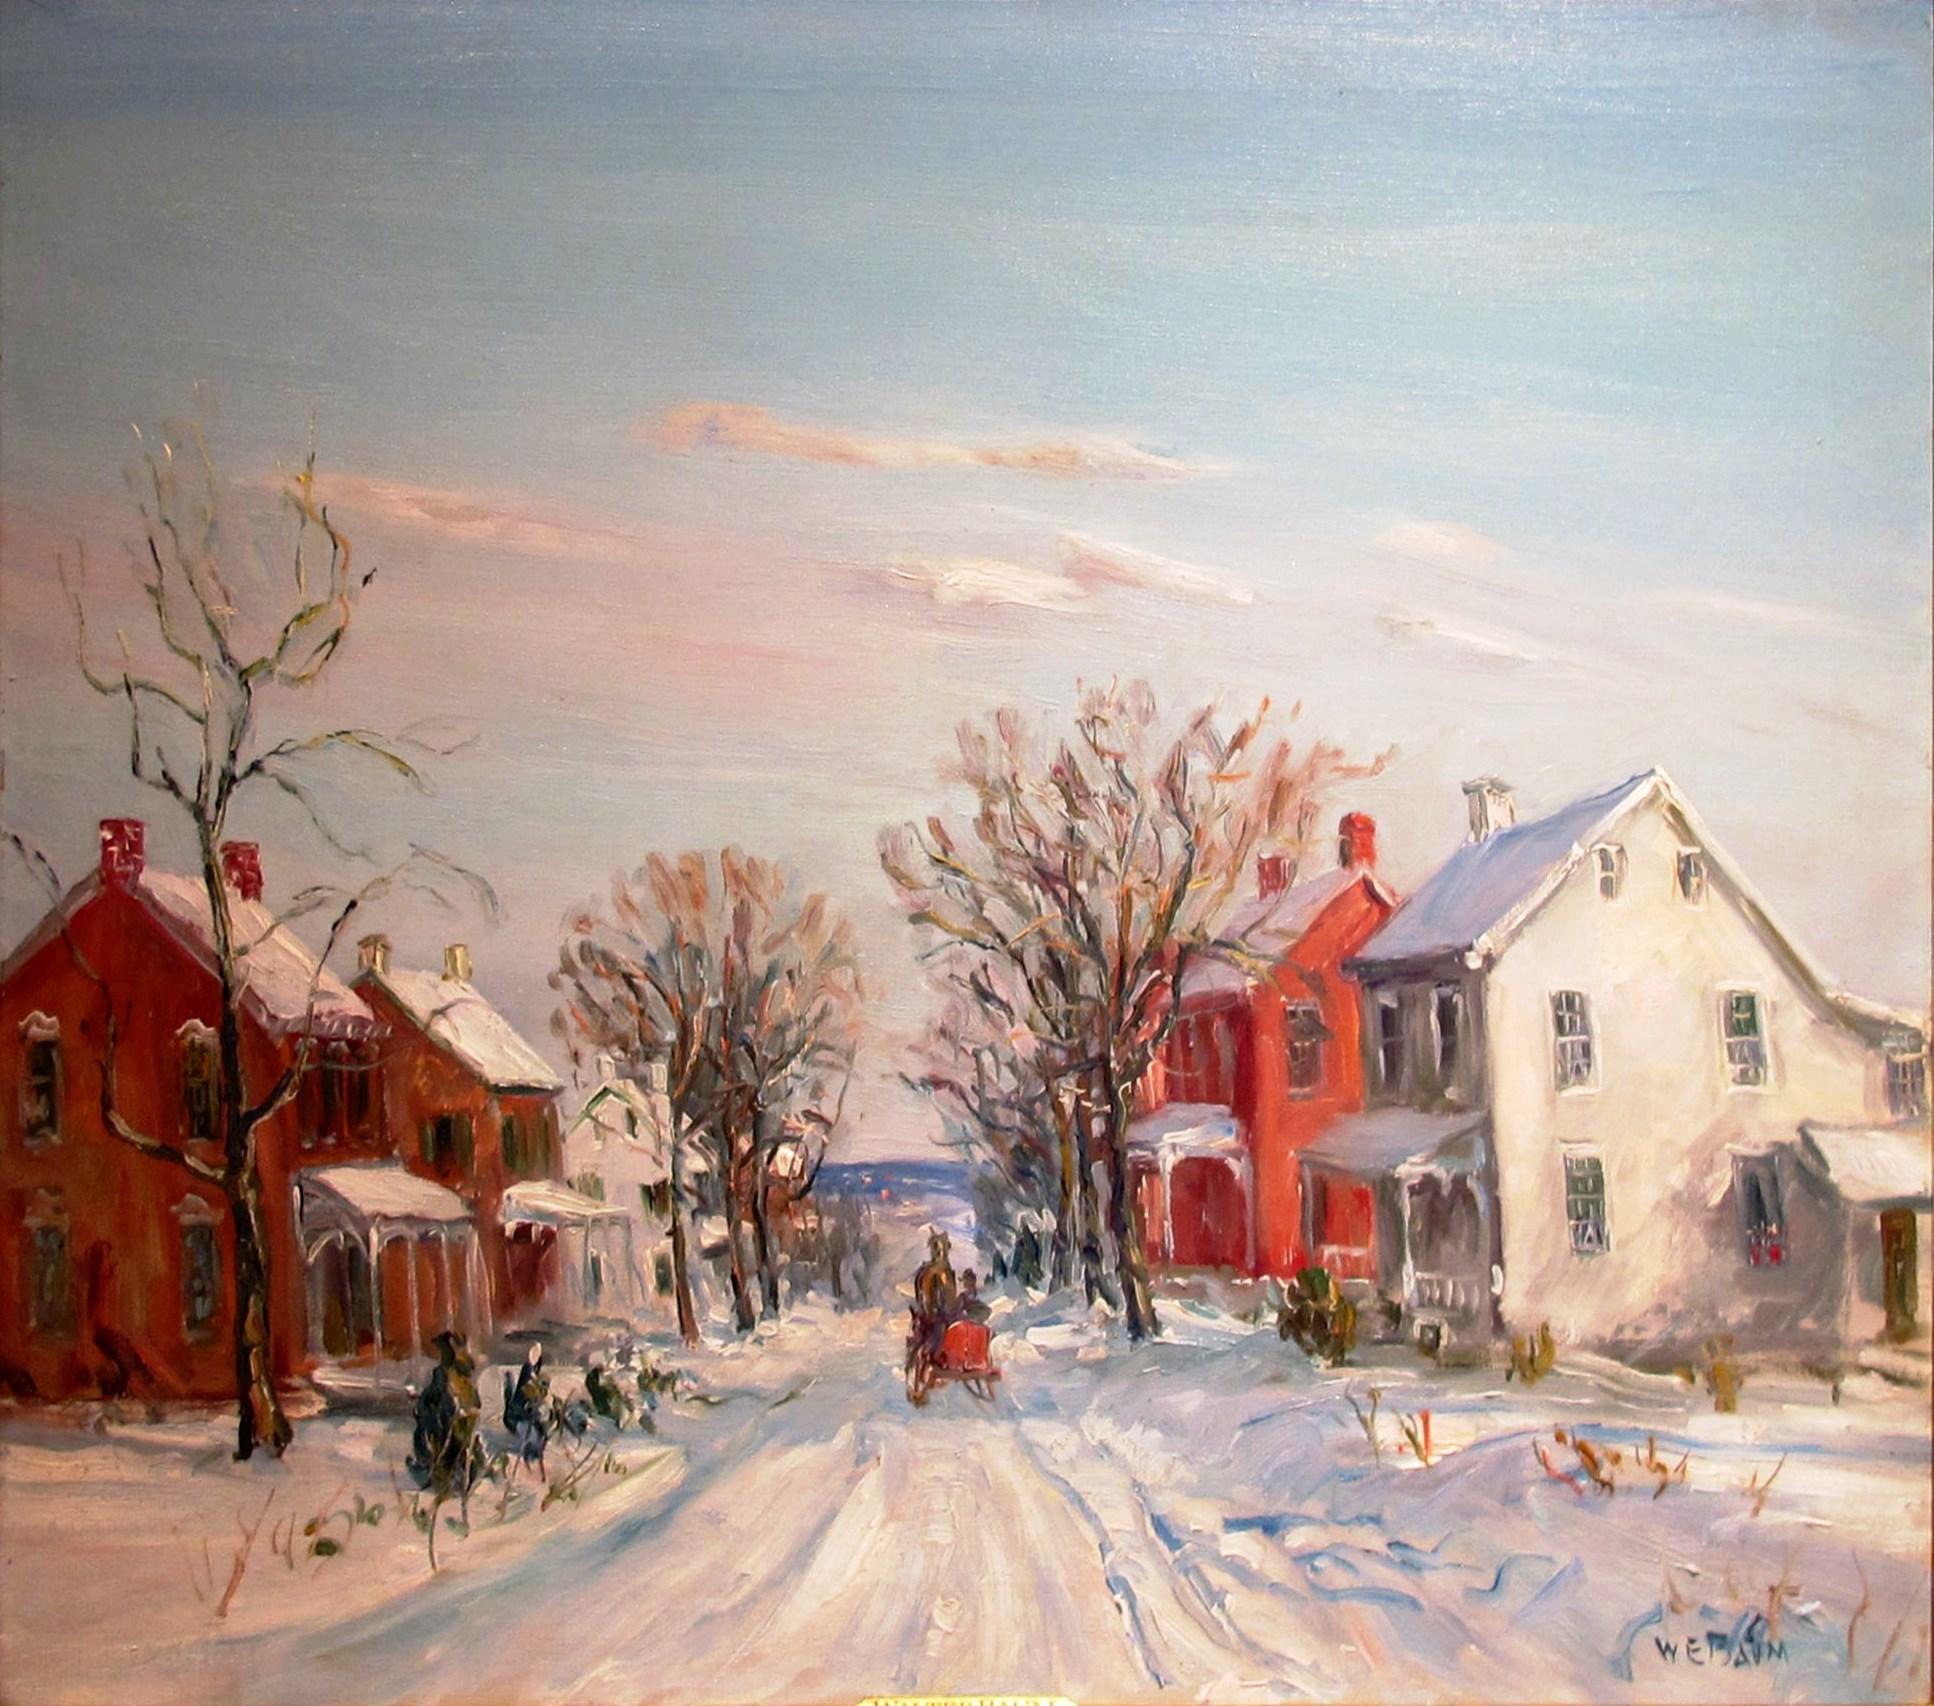 « Road to Ridge Valley » (Road to Ridge Valley) - Painting de Walter Emerson Baum